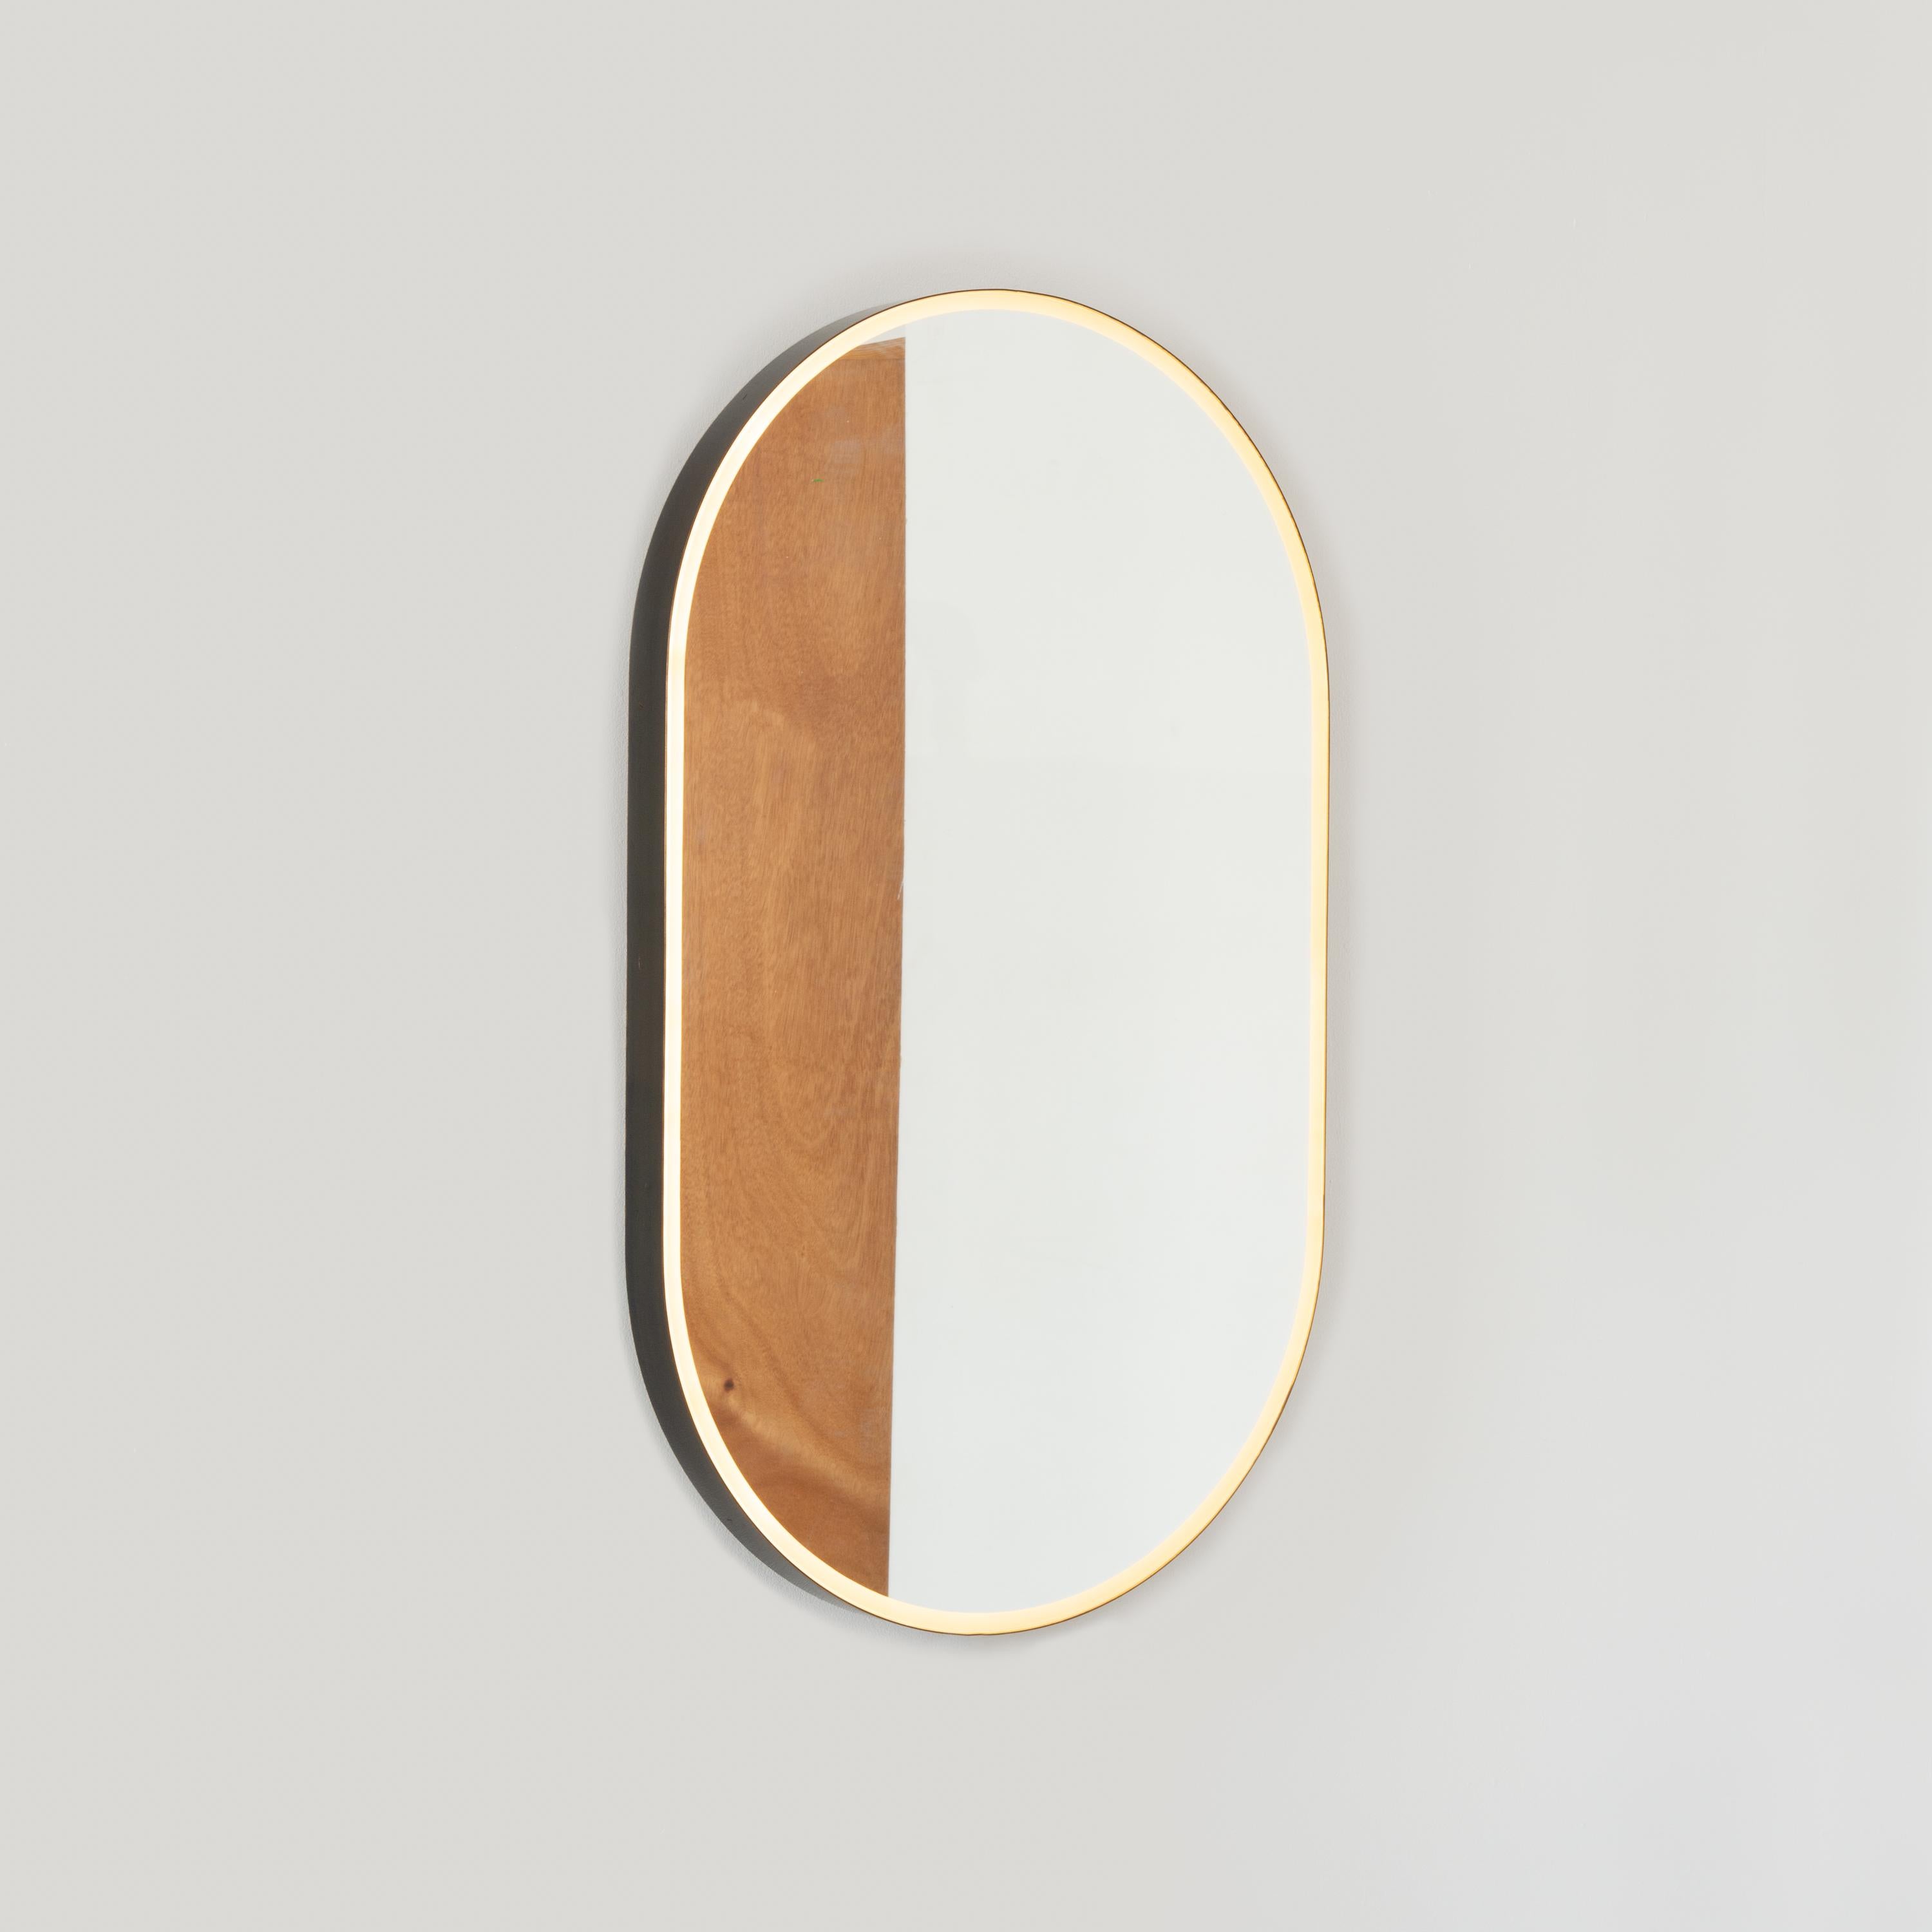 pill shape mirror